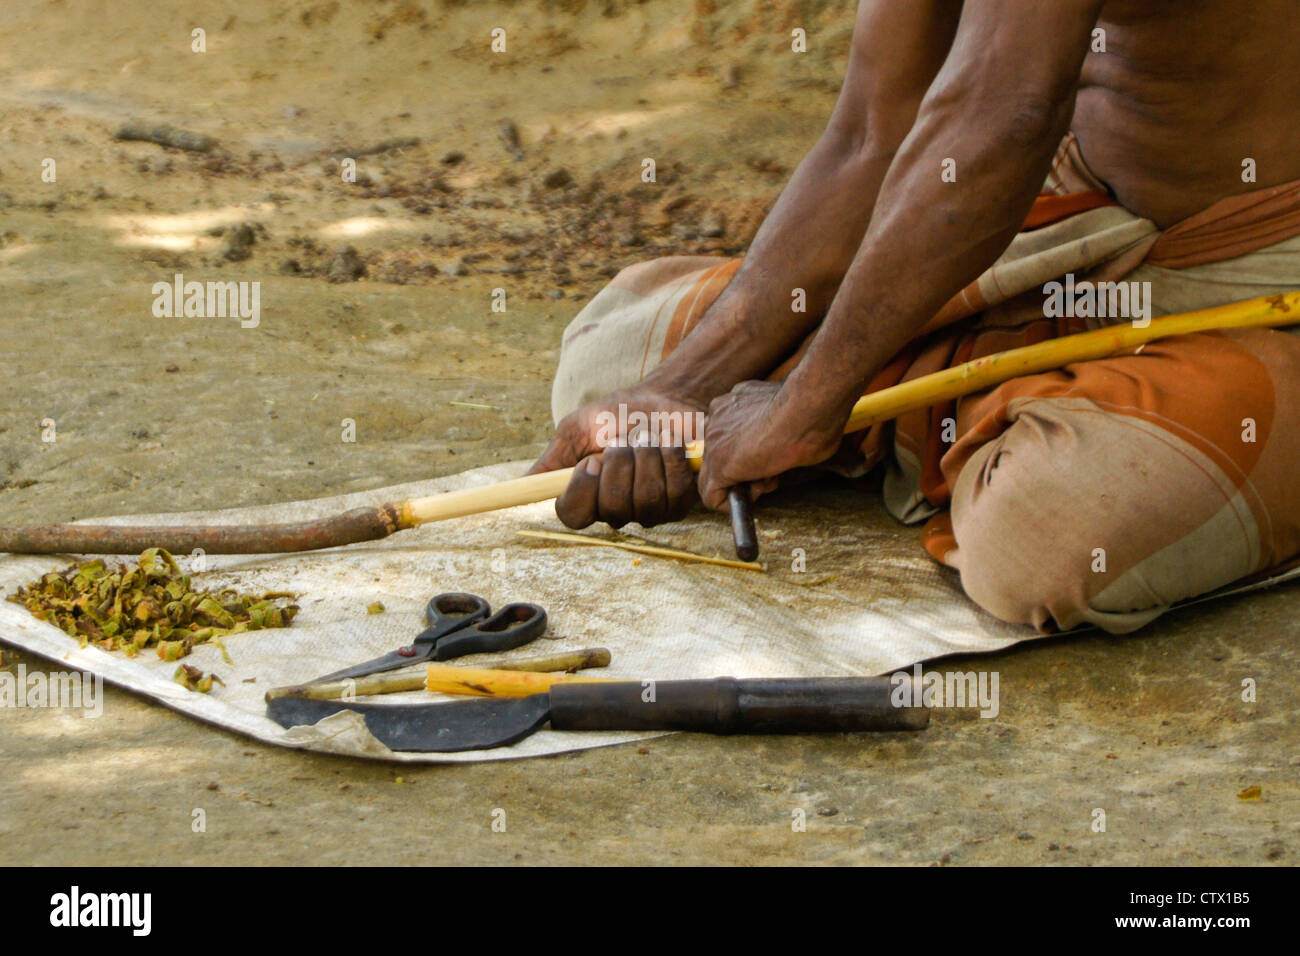 Man peeling cinnamon bark from branch, Sri Lanka Stock Photo